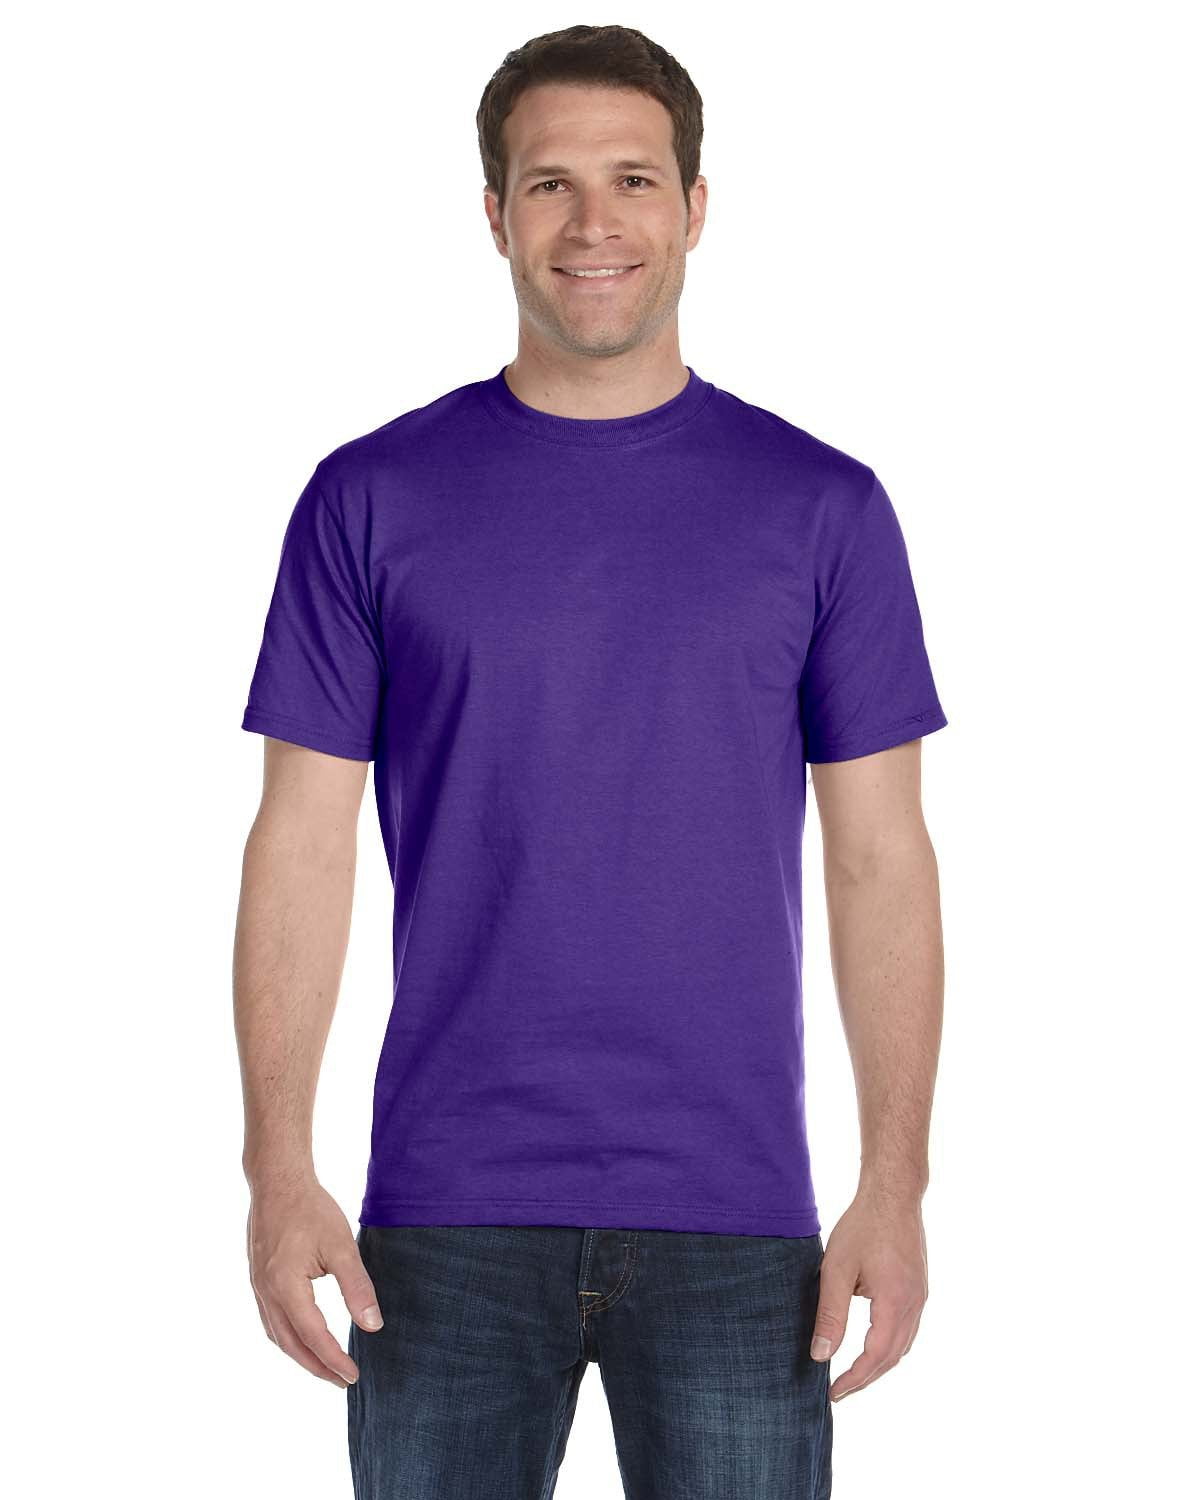 Hanes Adult 5.2 oz. ComfortSoft Cotton T-Shirt - 5280 - Walmart.com